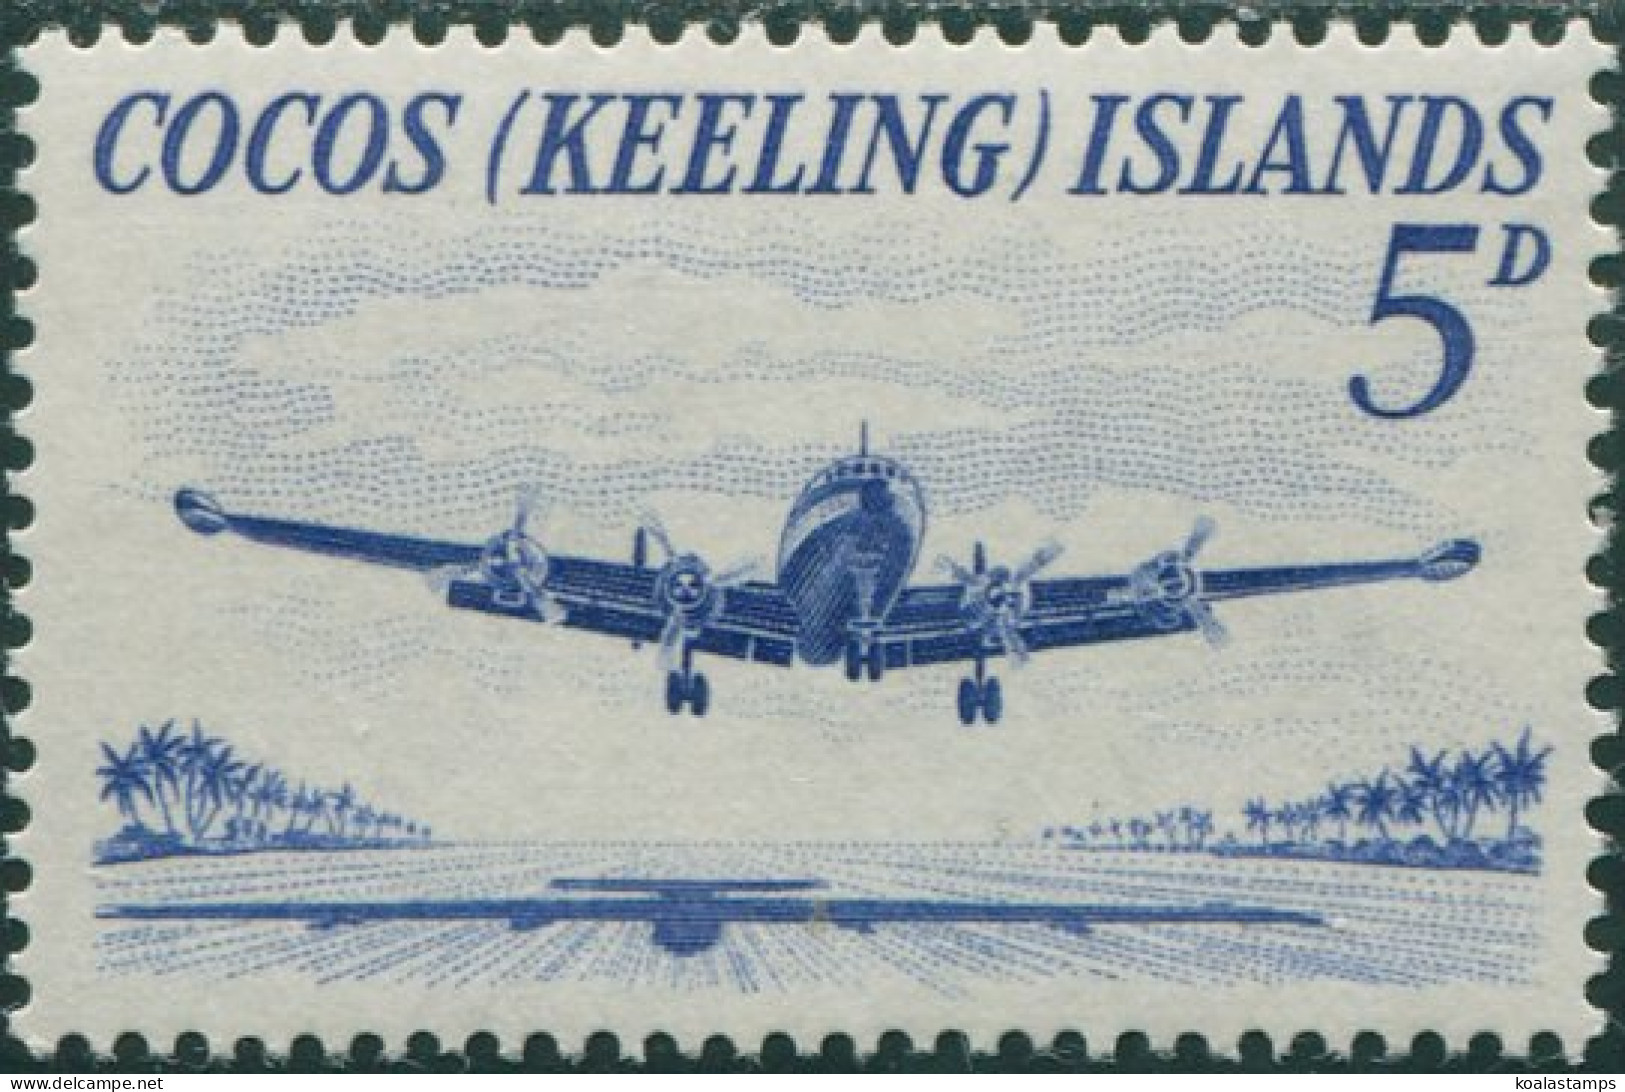 Cocos Islands 1963 SG2 5d Lockheed Airliner MNH - Islas Cocos (Keeling)